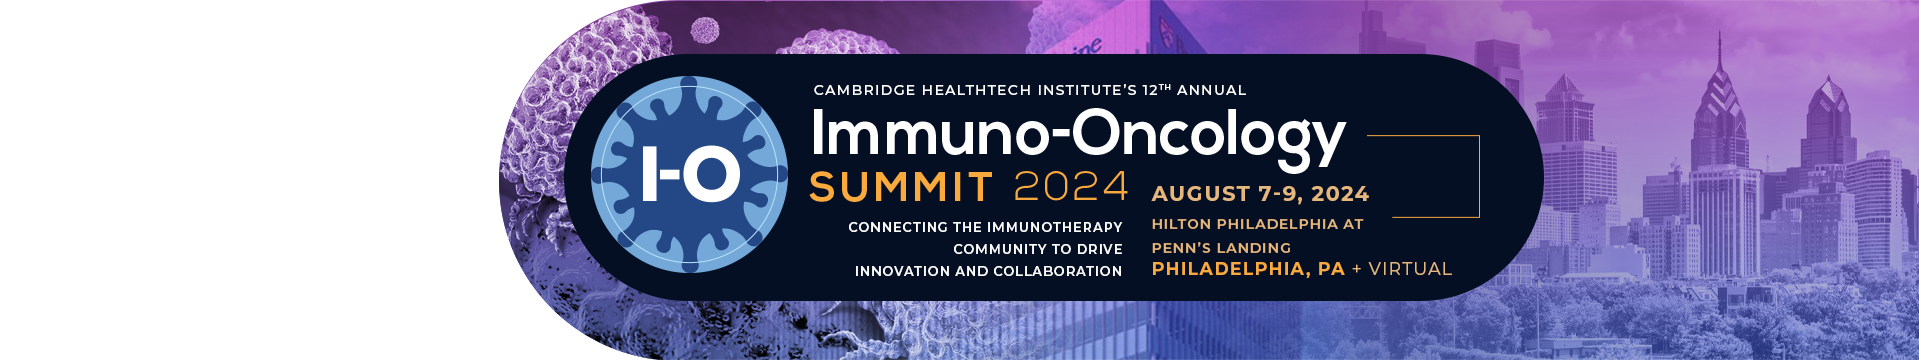 Immuno-Oncology Summit  2024